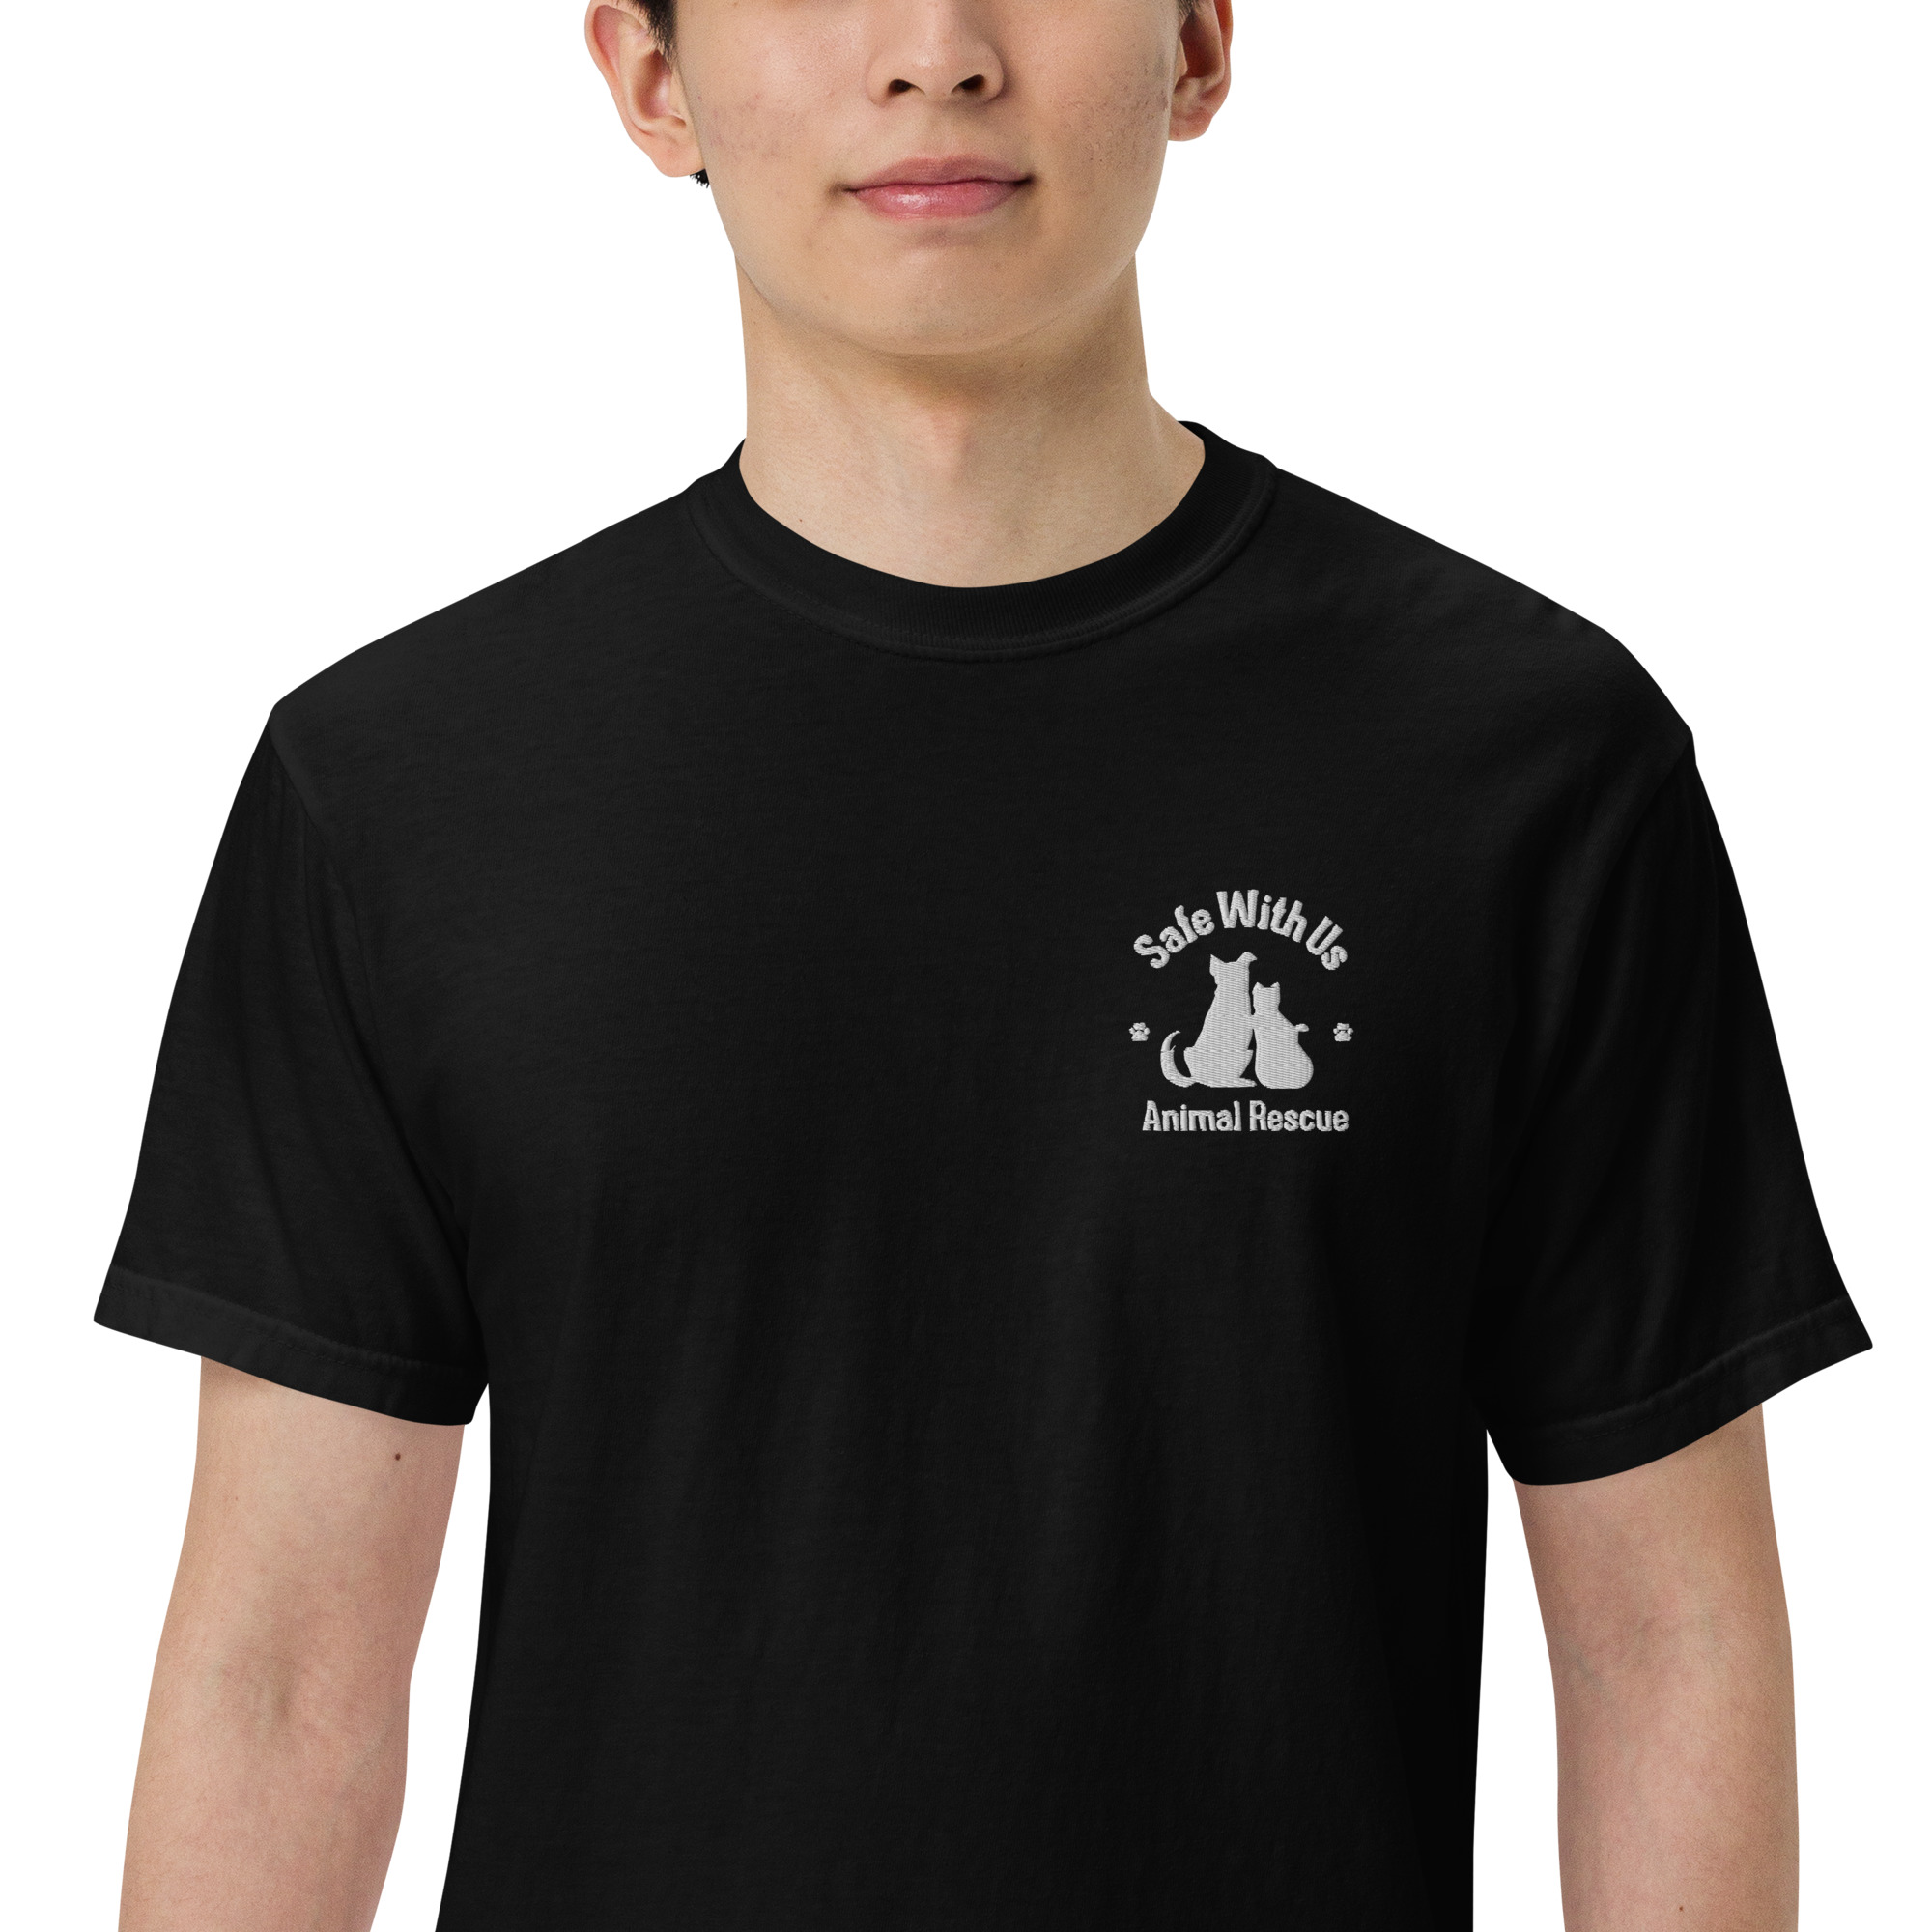 mens-garment-dyed-heavyweight-t-shirt-black-zoomed-in-6415fedc241b7-1.jpg